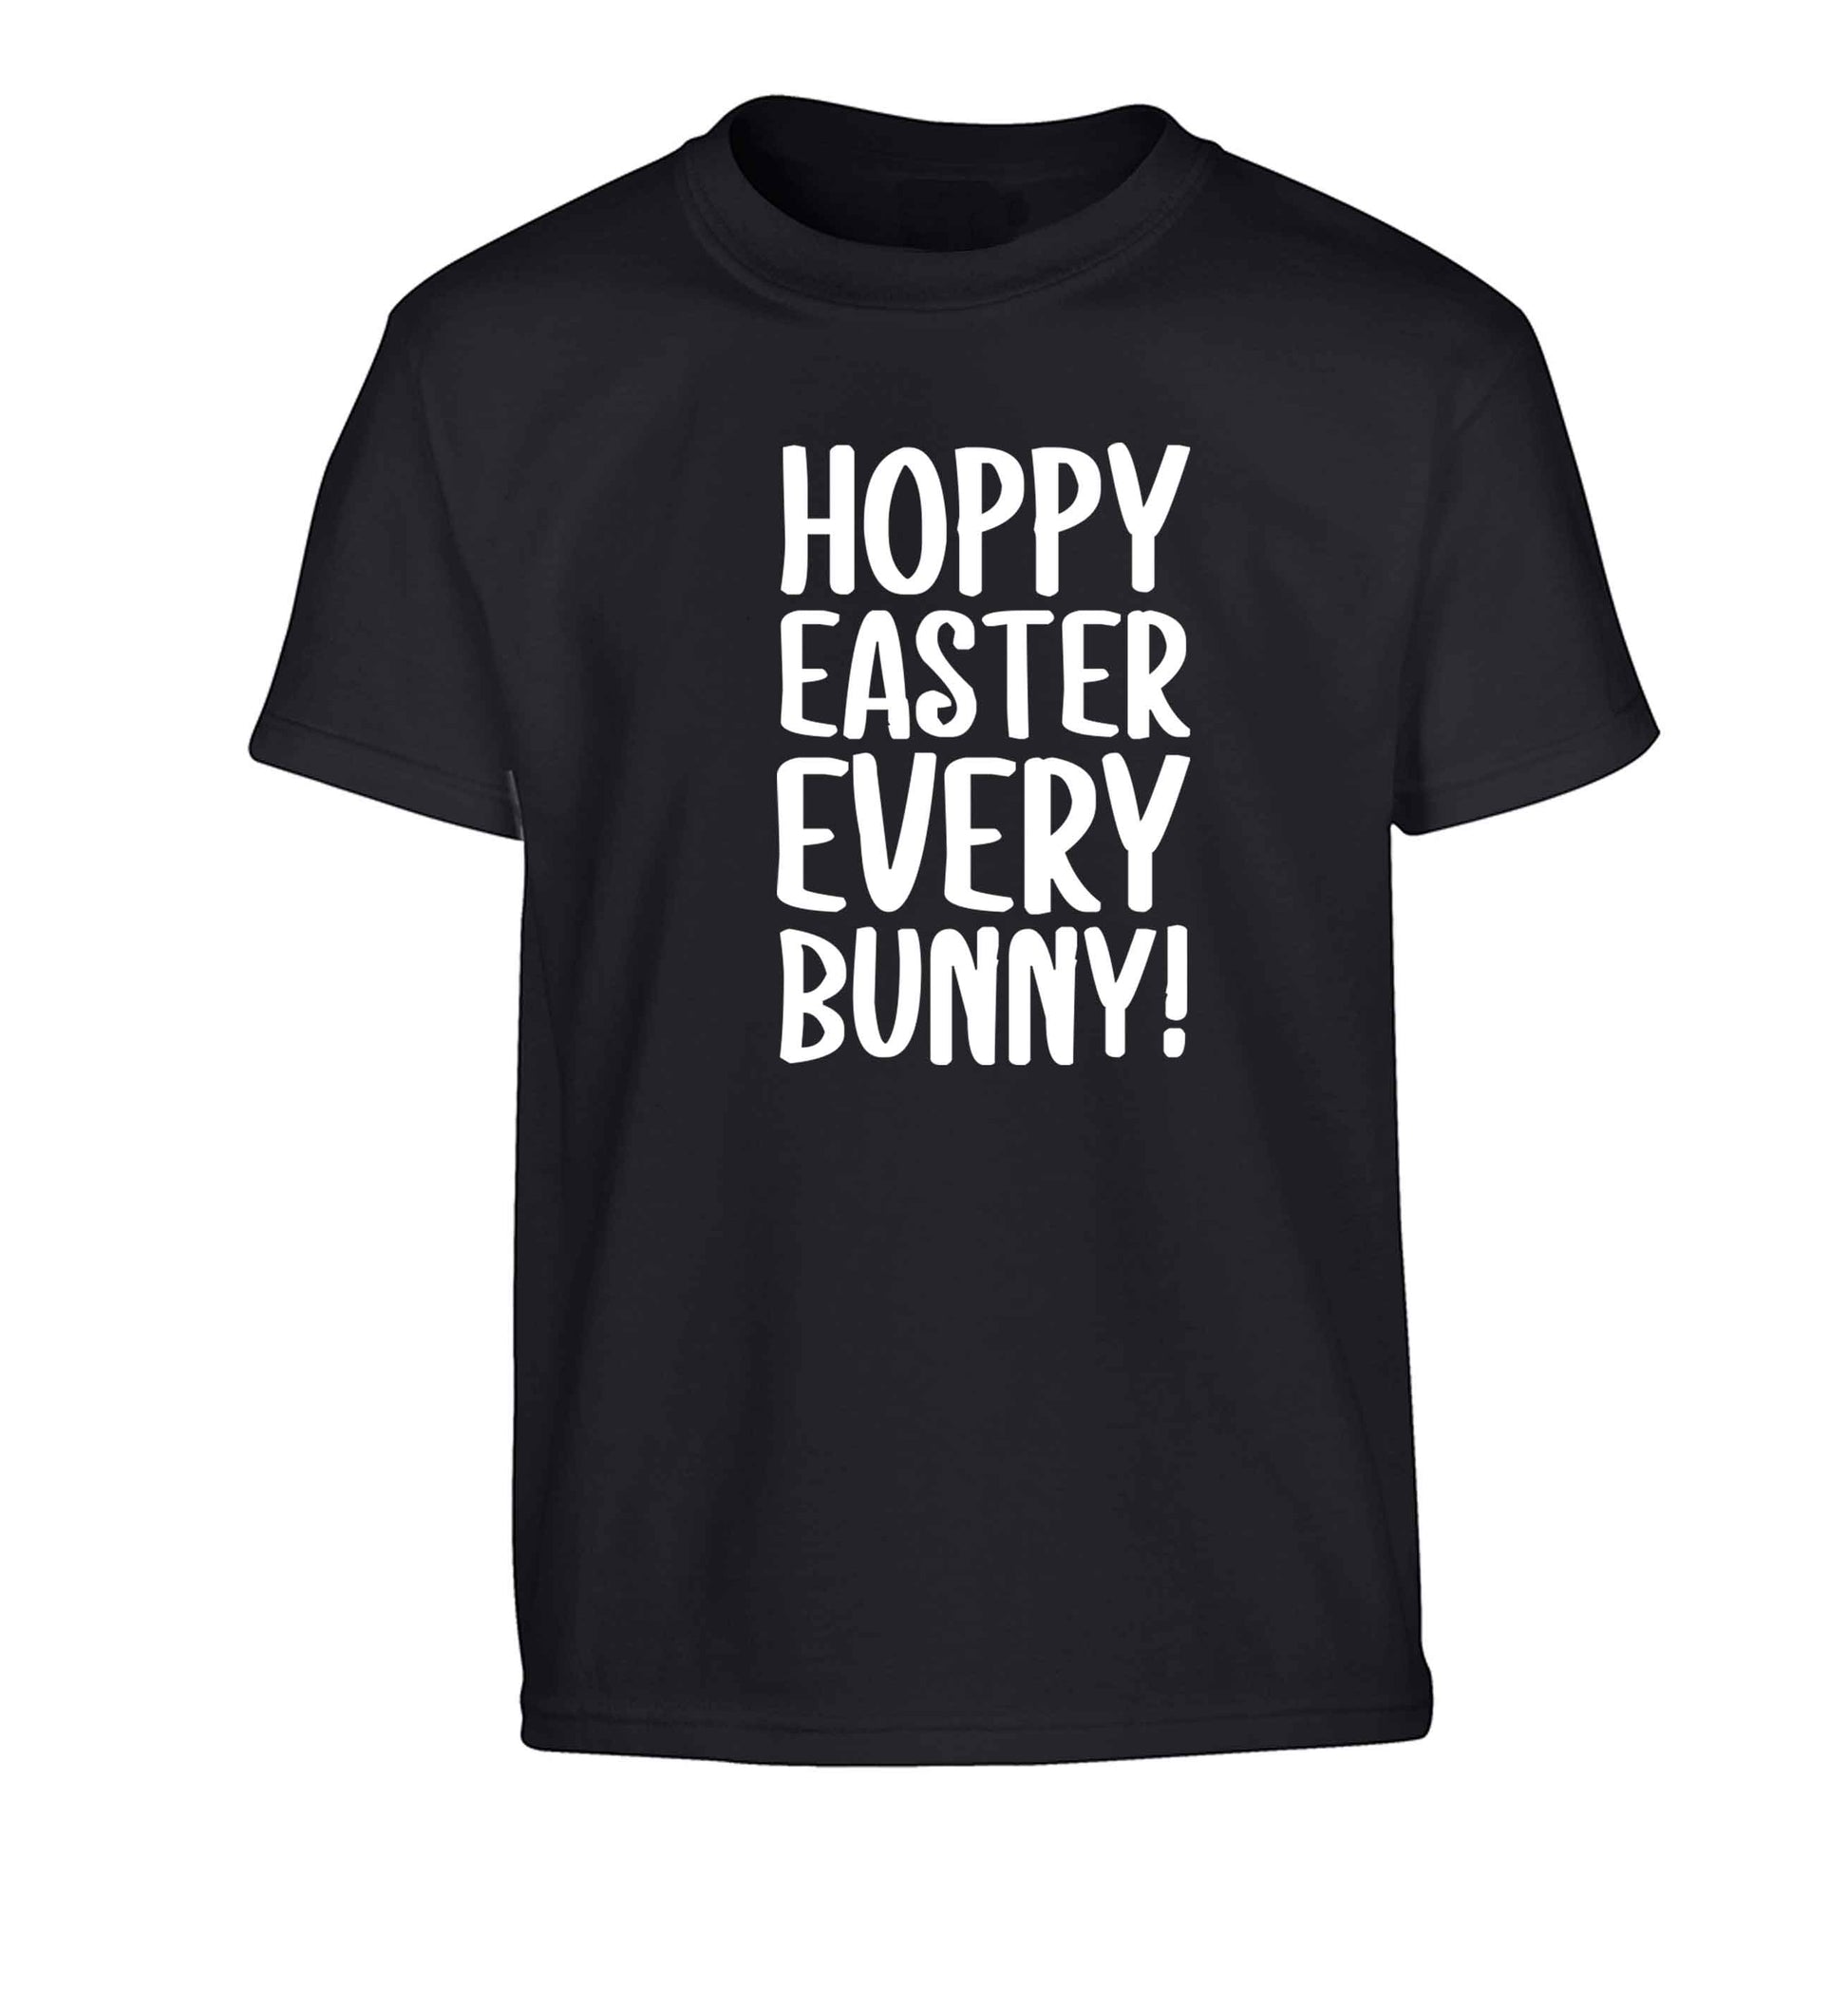 Hoppy Easter every bunny! Children's black Tshirt 12-13 Years